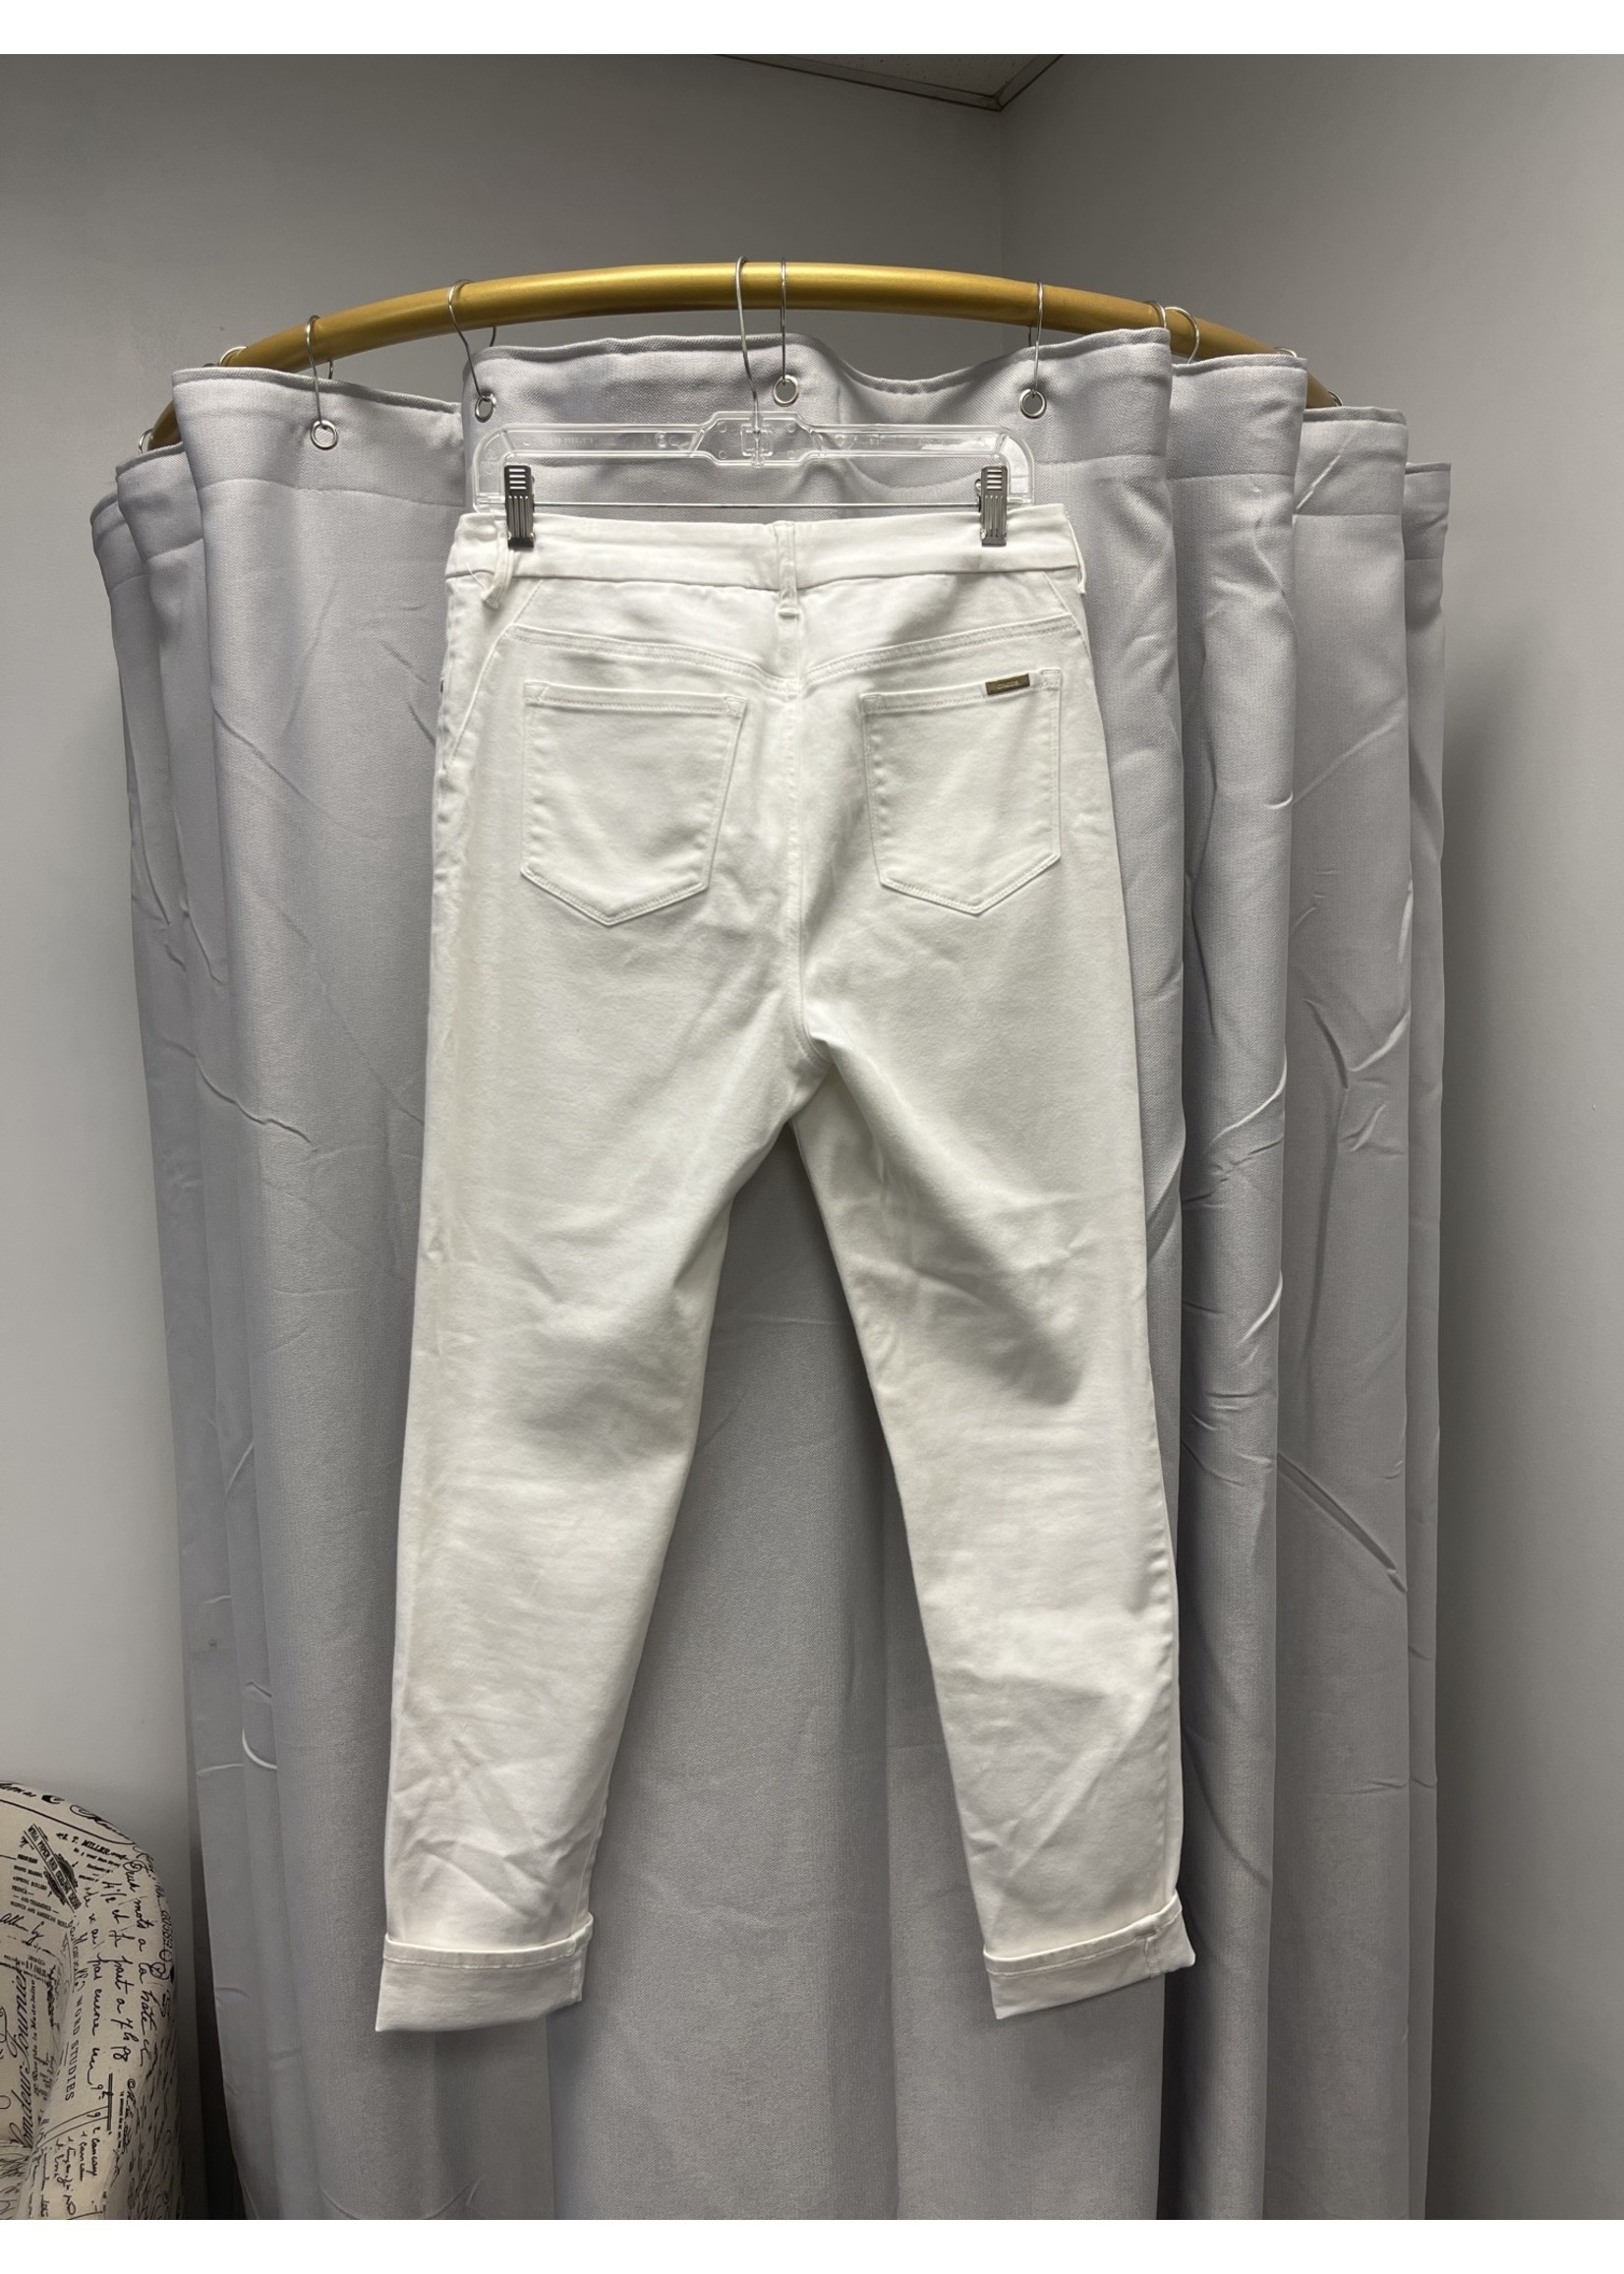 Chico's So Slimming White Denim Pants (1.5) M/10 Pre-owned